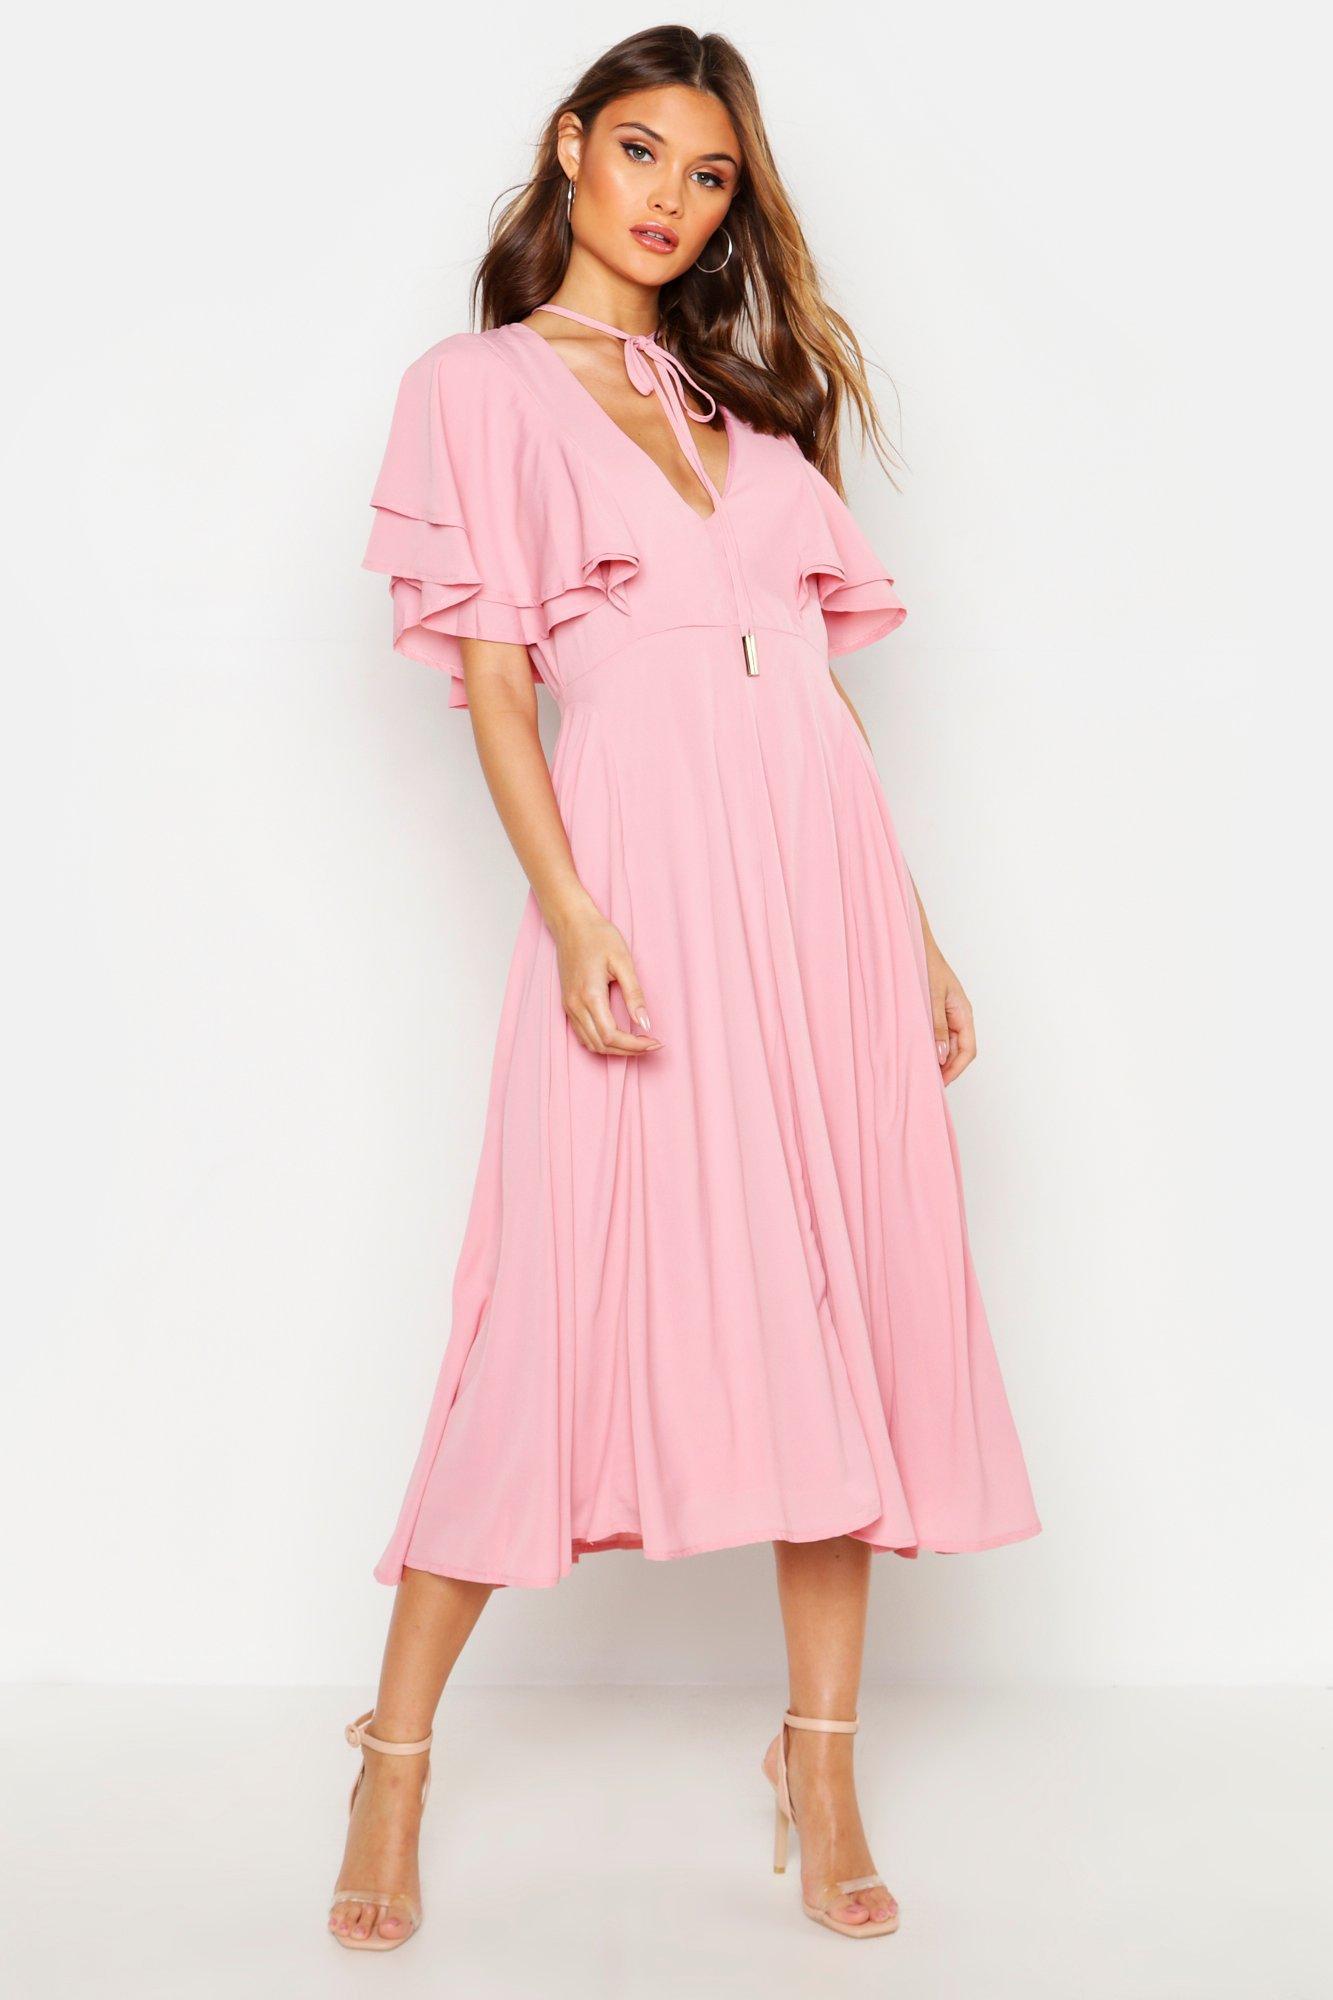 Boohoo Womens Ruffle Angel Sleeve Bolo Tie Midi Dress in Pink - Lyst